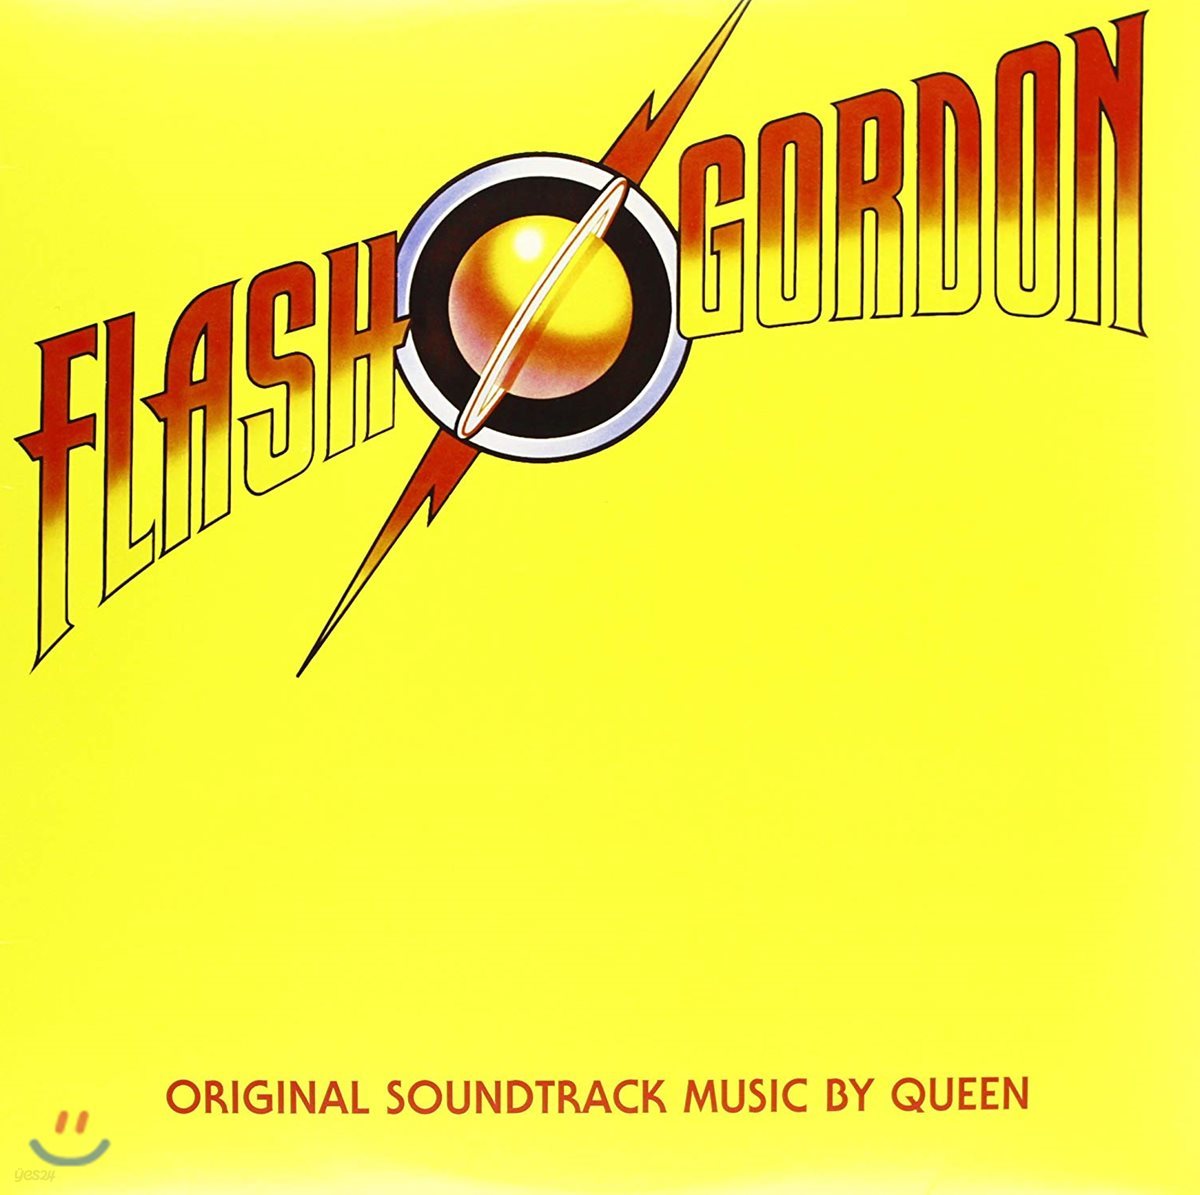 Queen - Flash Gordon 제국의 종말 OST 